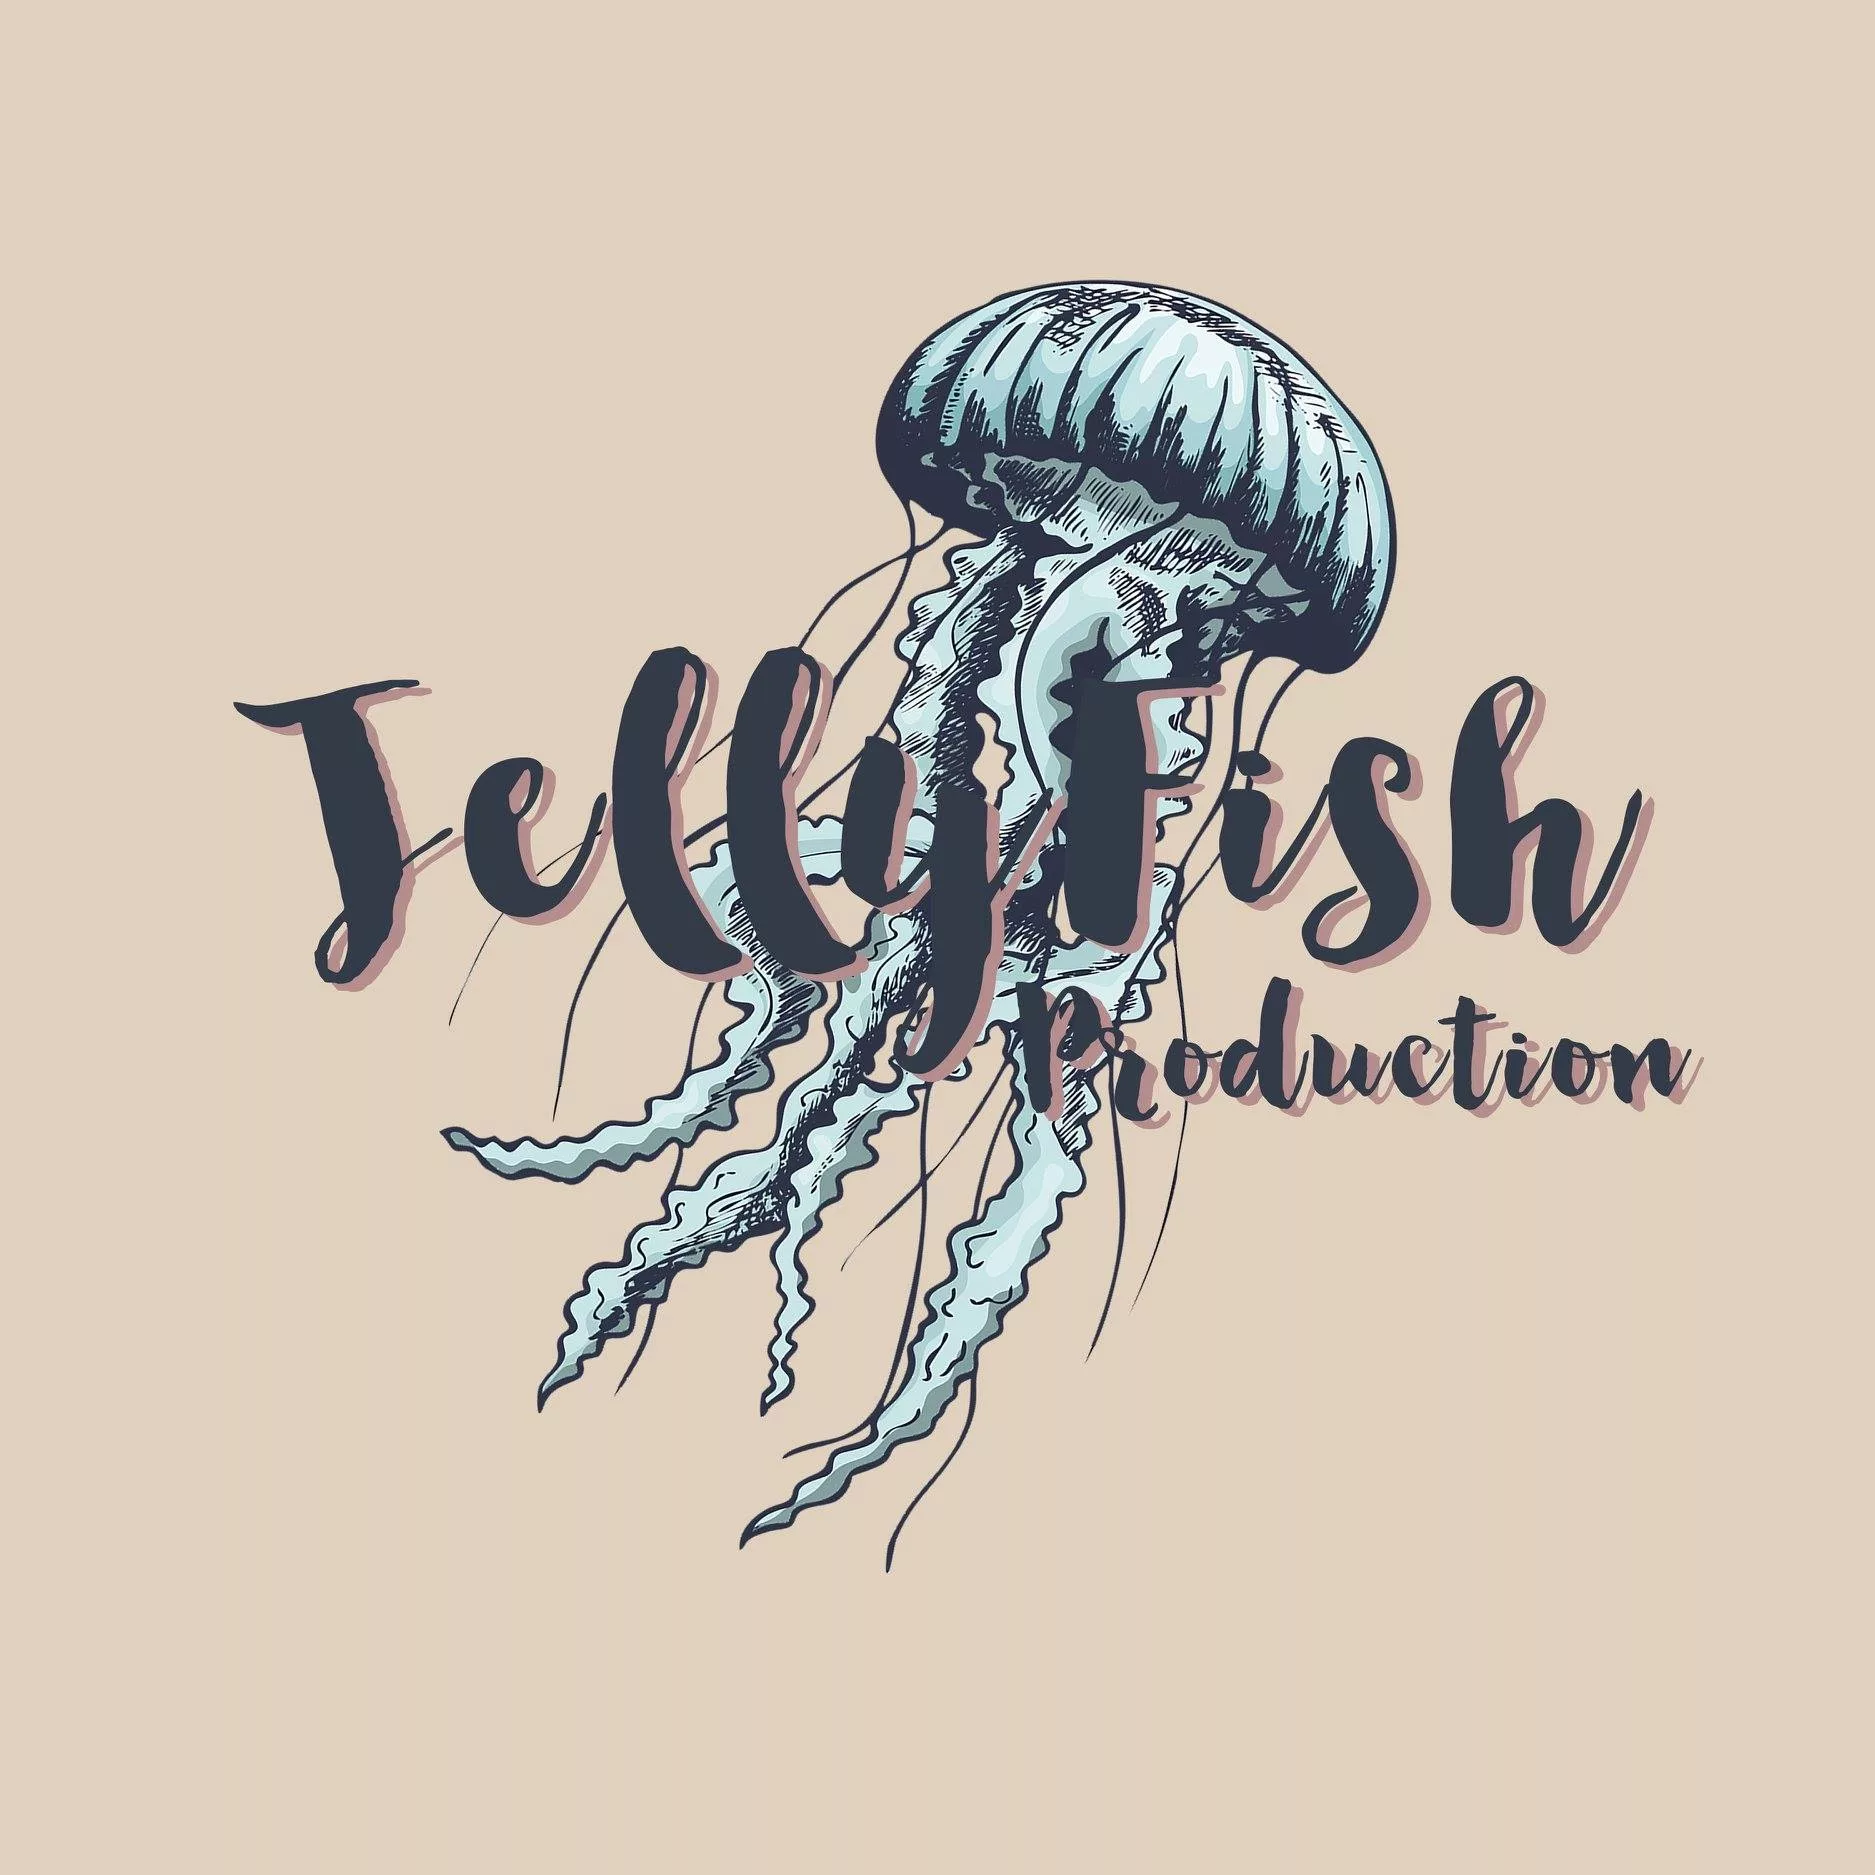 JellyFish Production : Photographer
Videographer